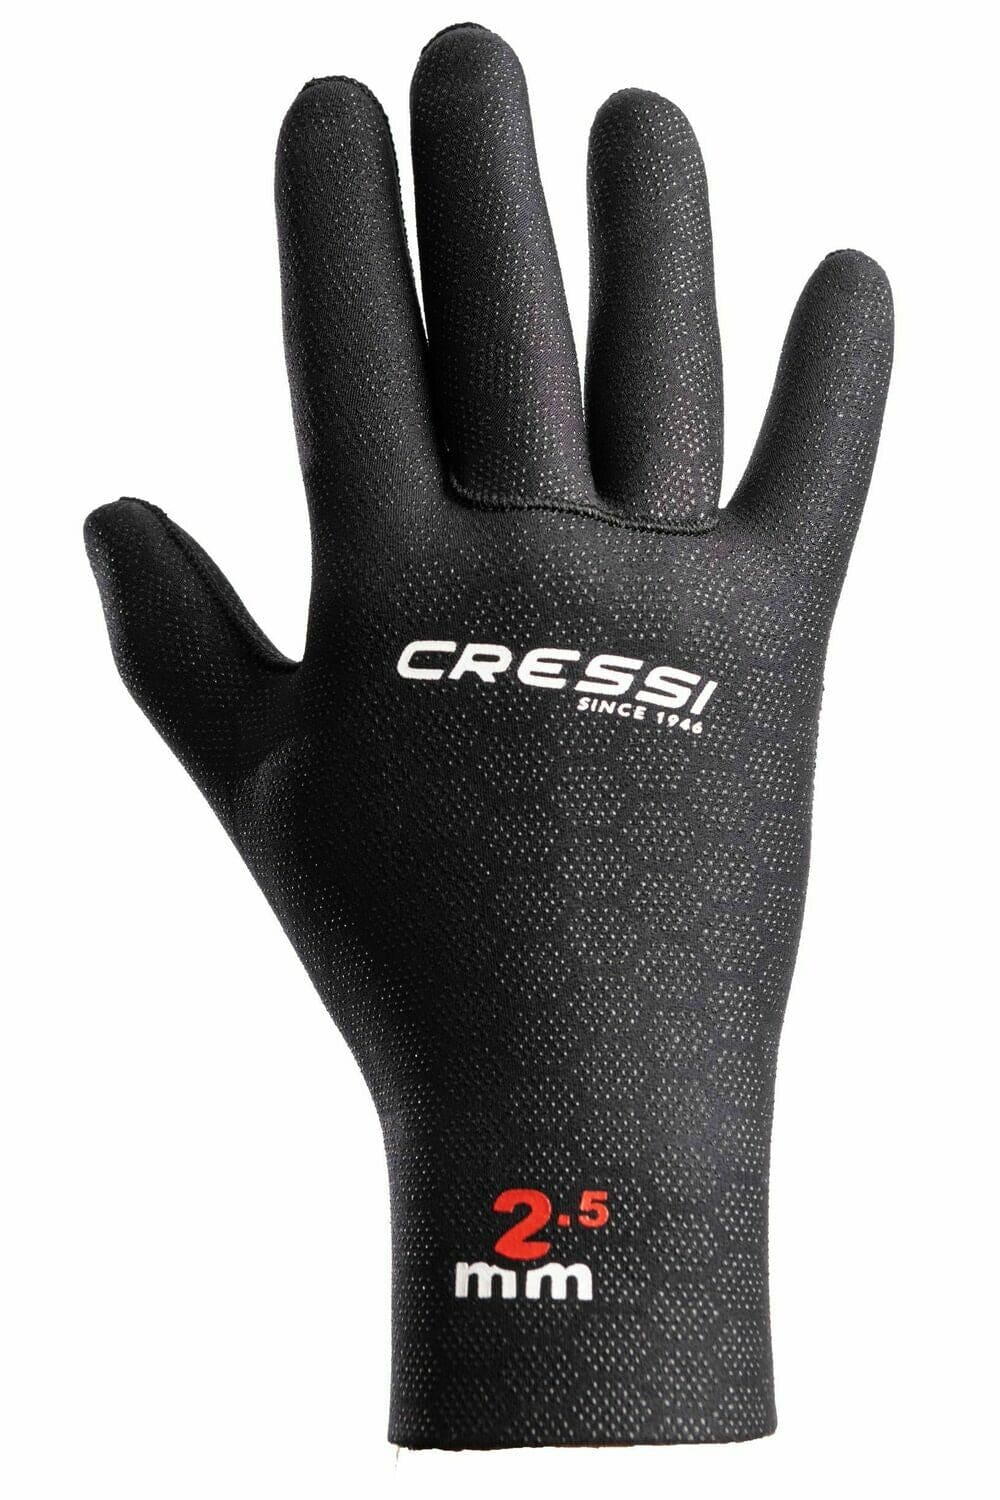 Cressi Spider Go Gloves - Dive & Fish dive shop